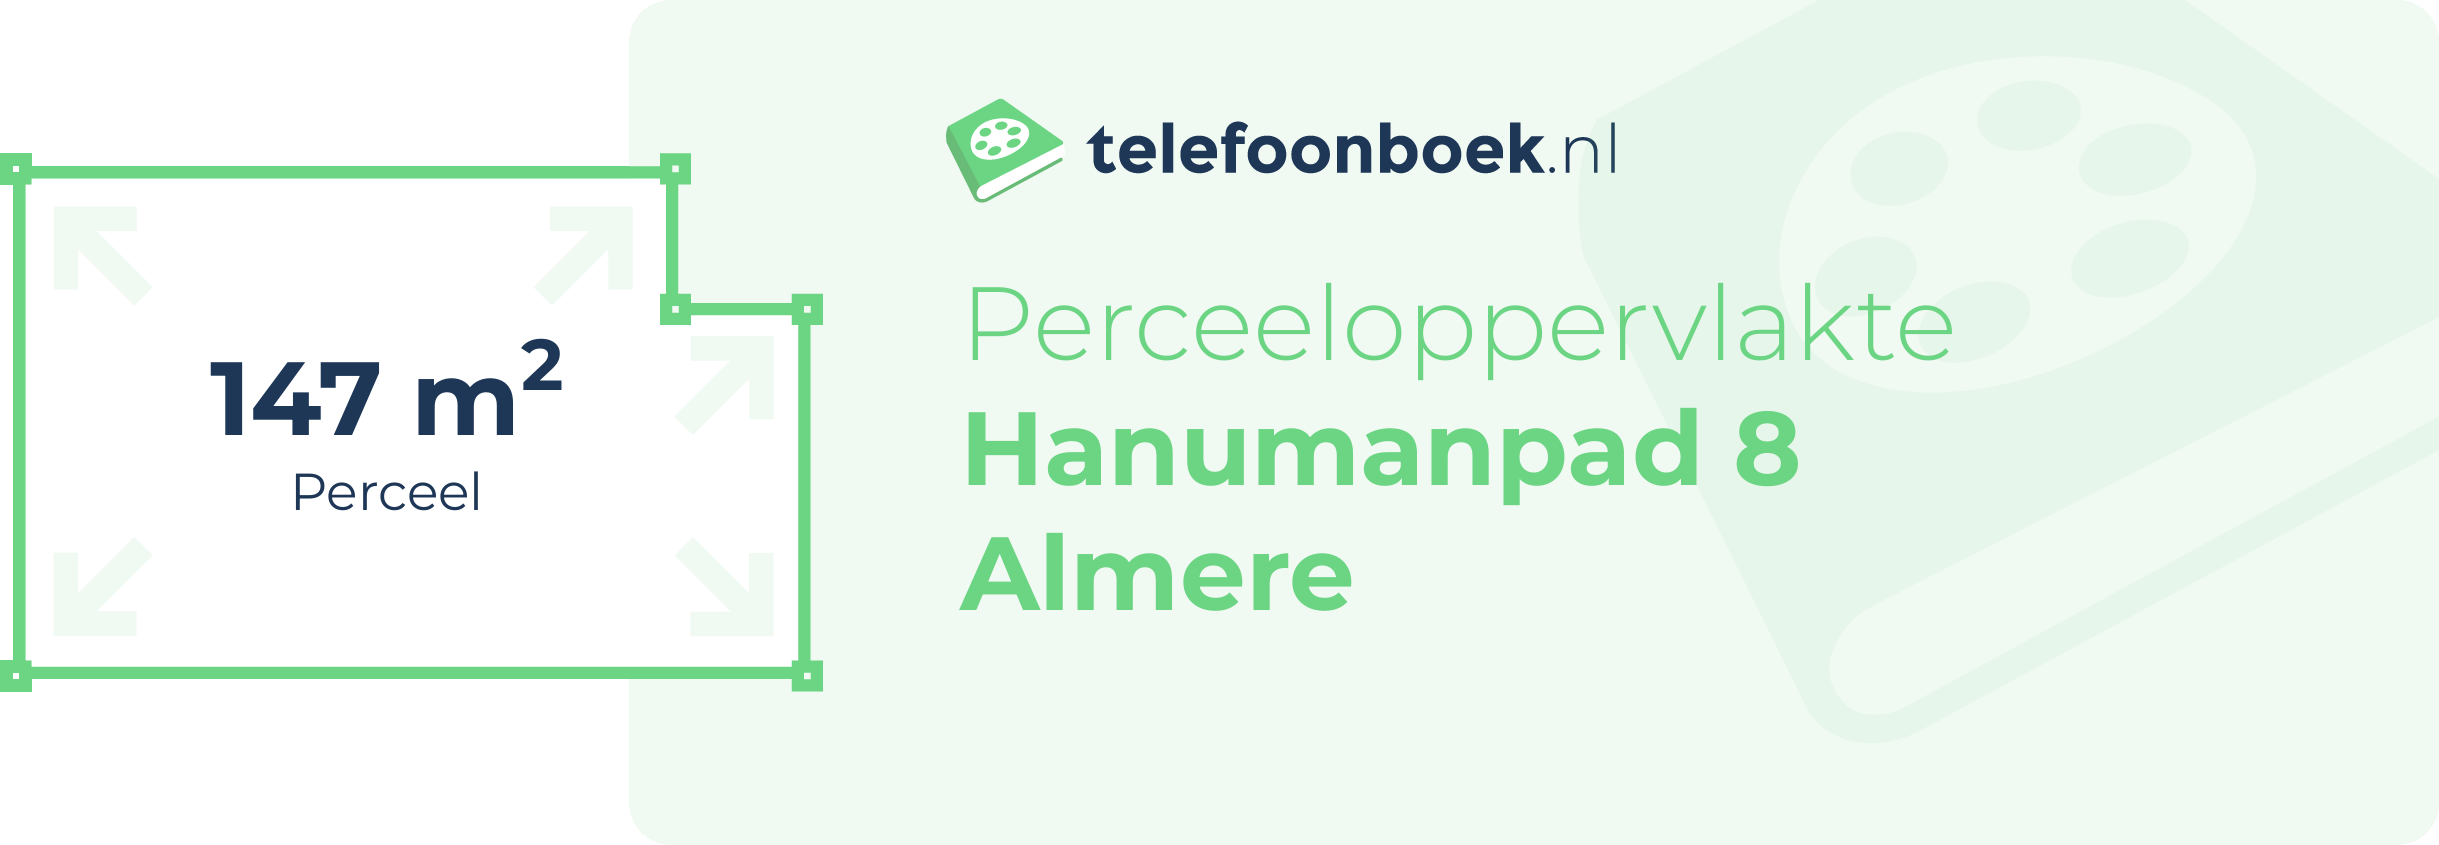 Perceeloppervlakte Hanumanpad 8 Almere